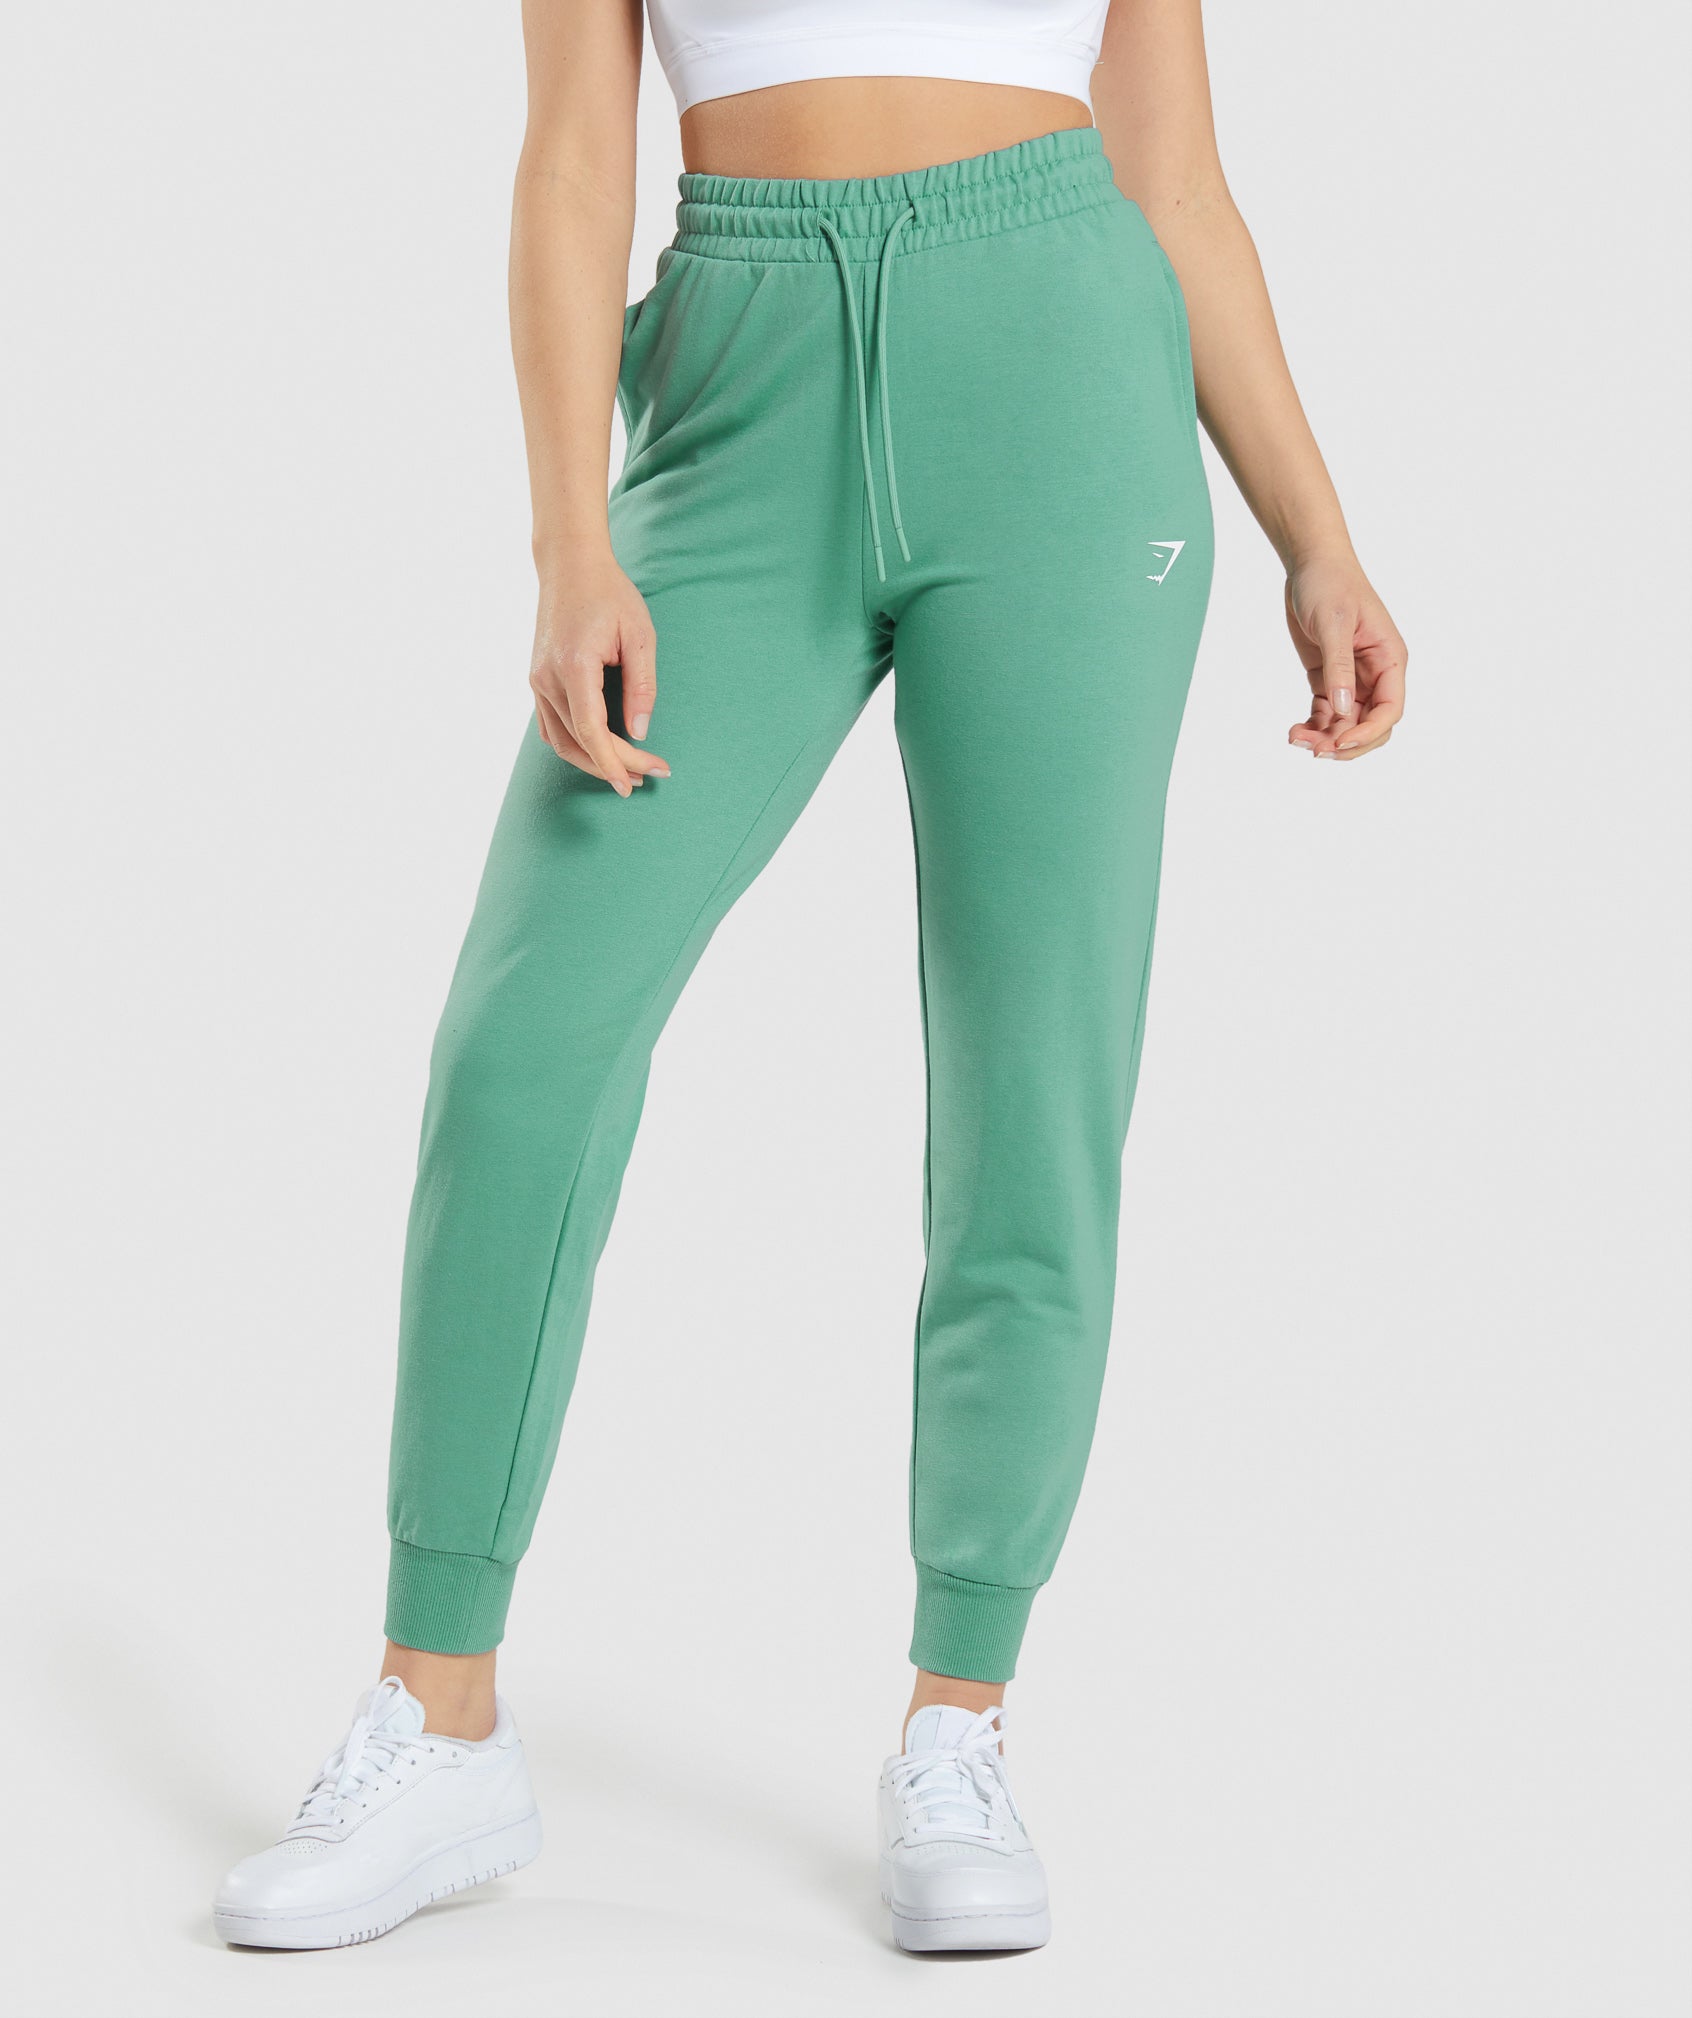 Skinny Cargo Ladies Pants High Waist Jogger Trousers Sexy Sweatpants CN  S-4XL | eBay